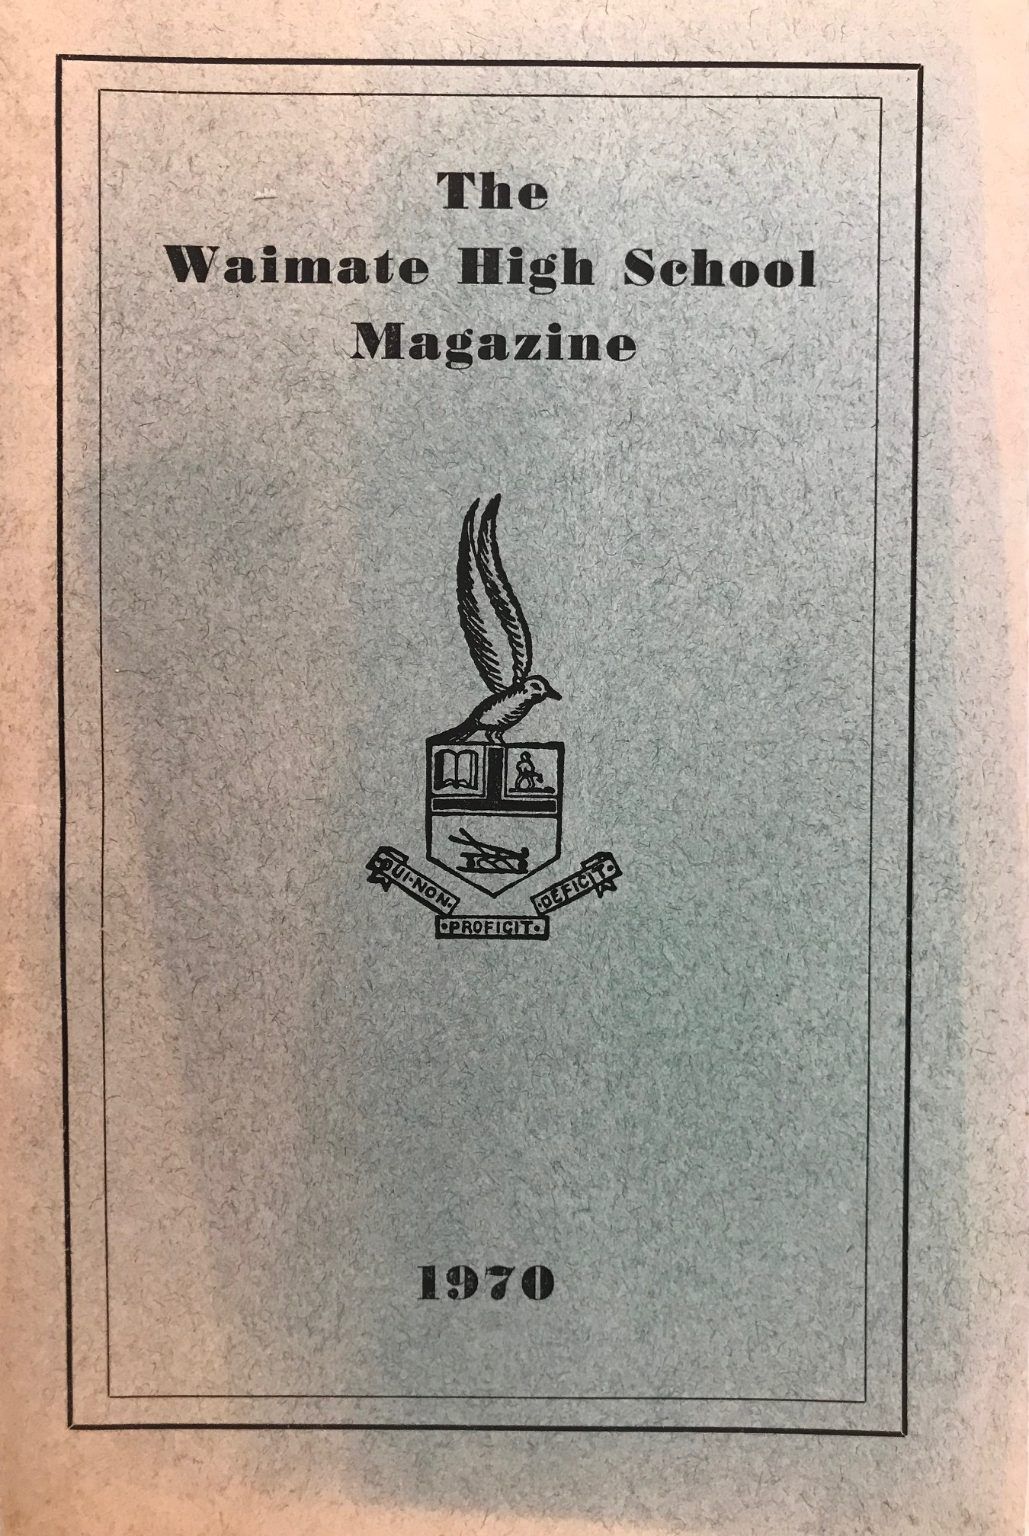 THE WAIMATE HIGH SCHOOL MAGAZINE: Volume XXXV 1970